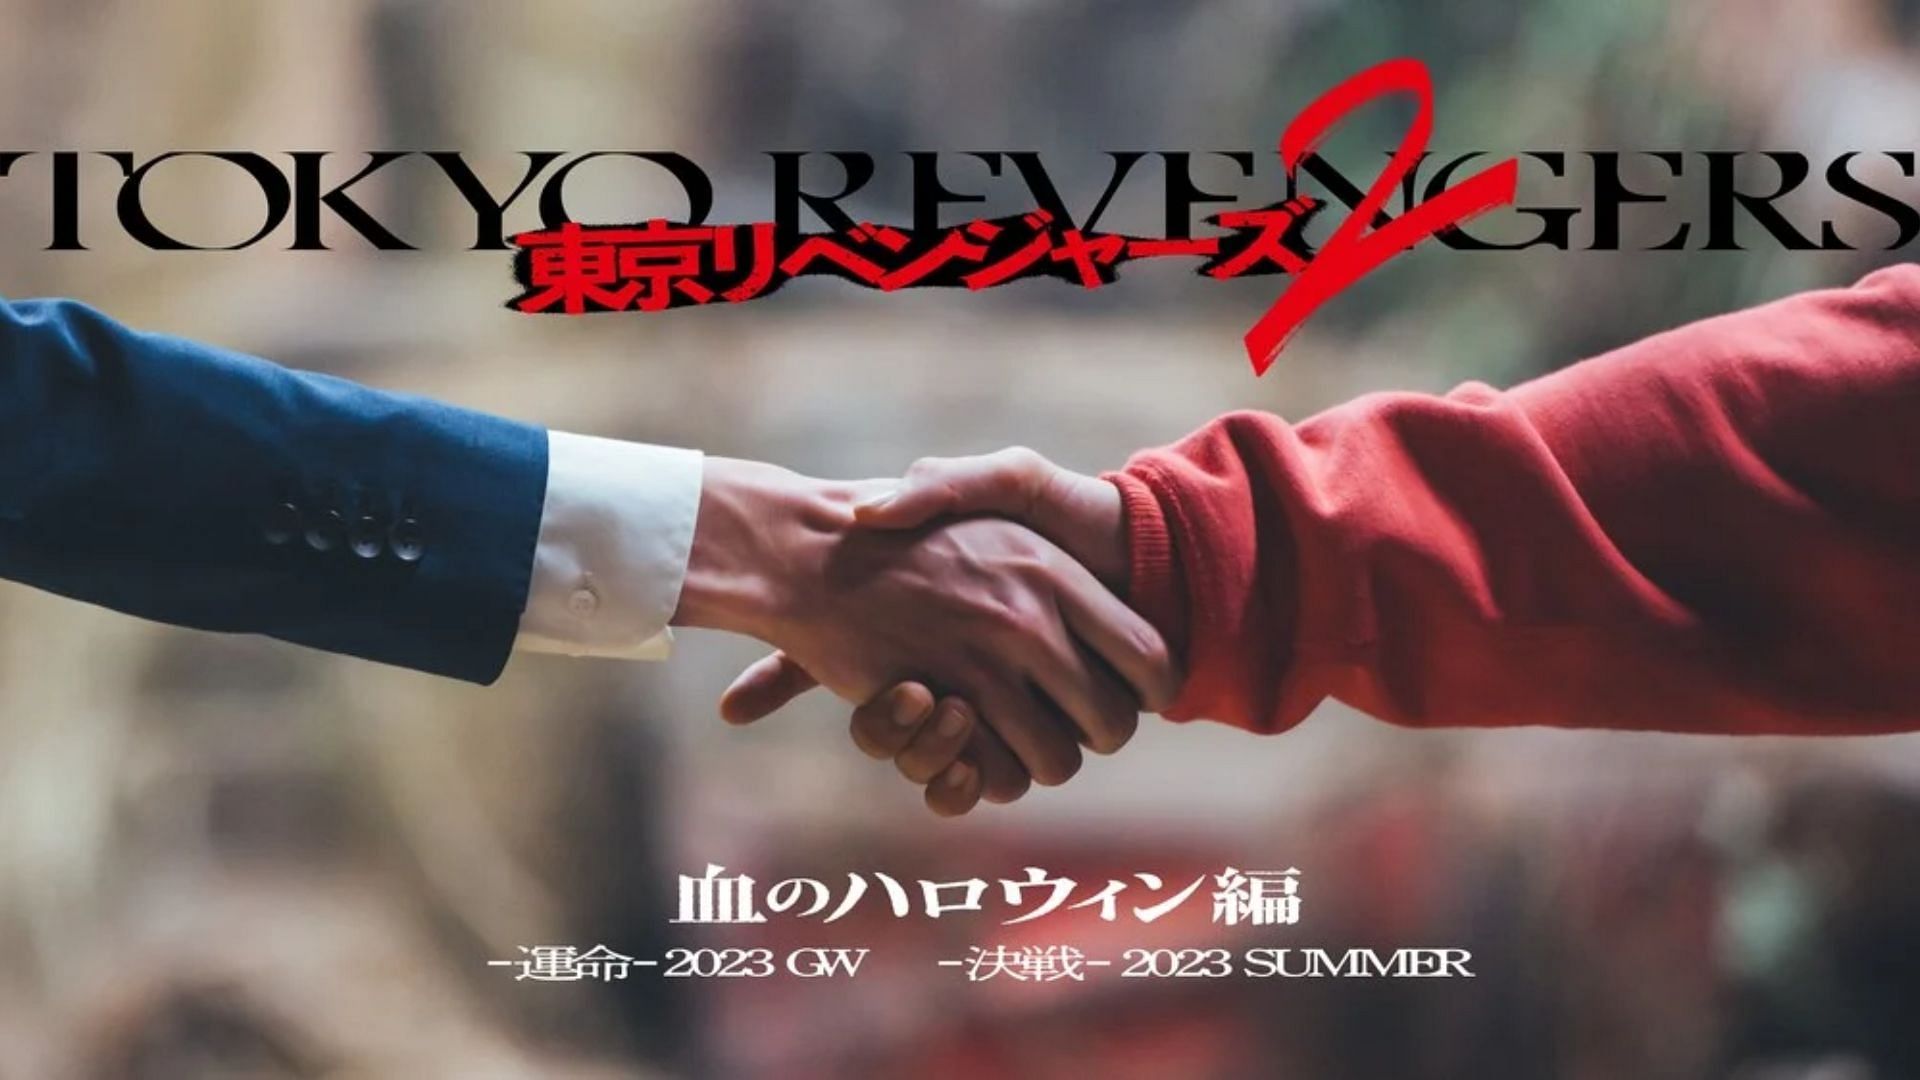 Tokyo Revengers 2 live-action film drops Kisaki and Hanma's